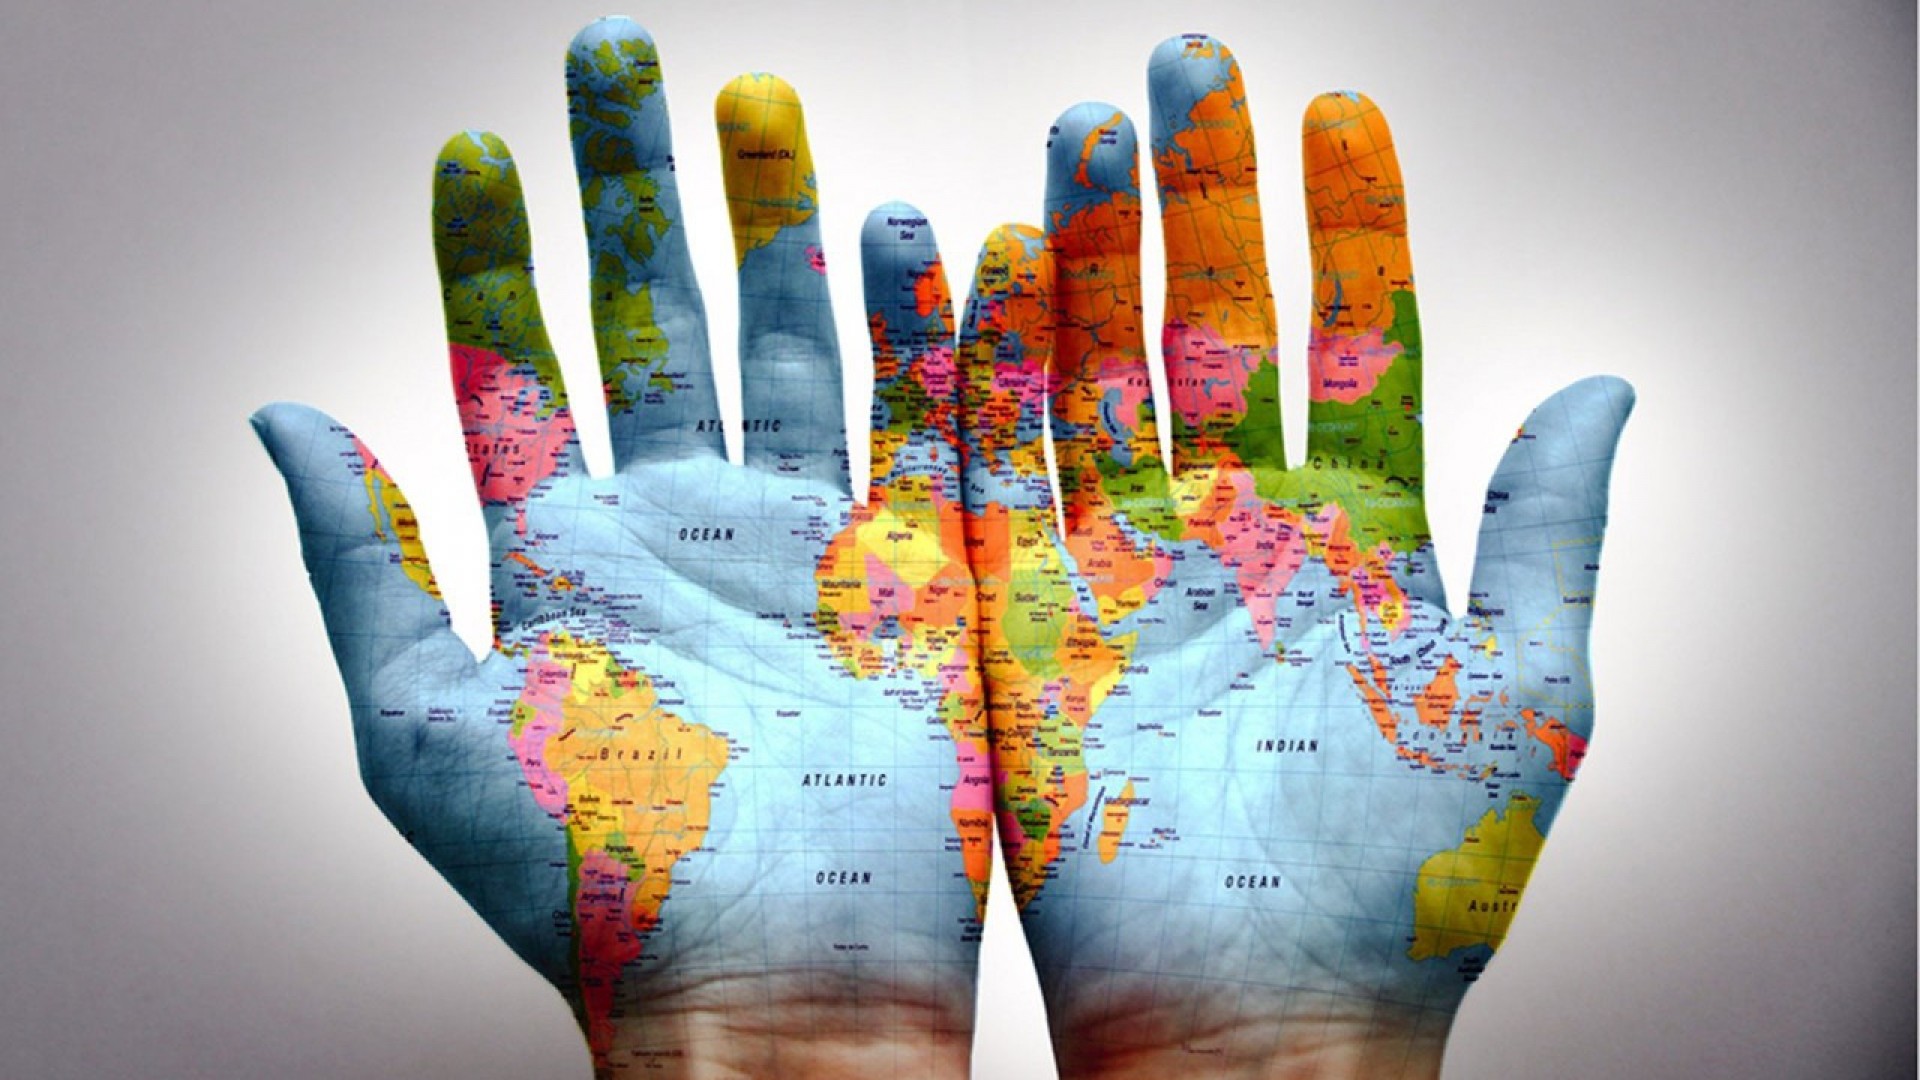 World in hands